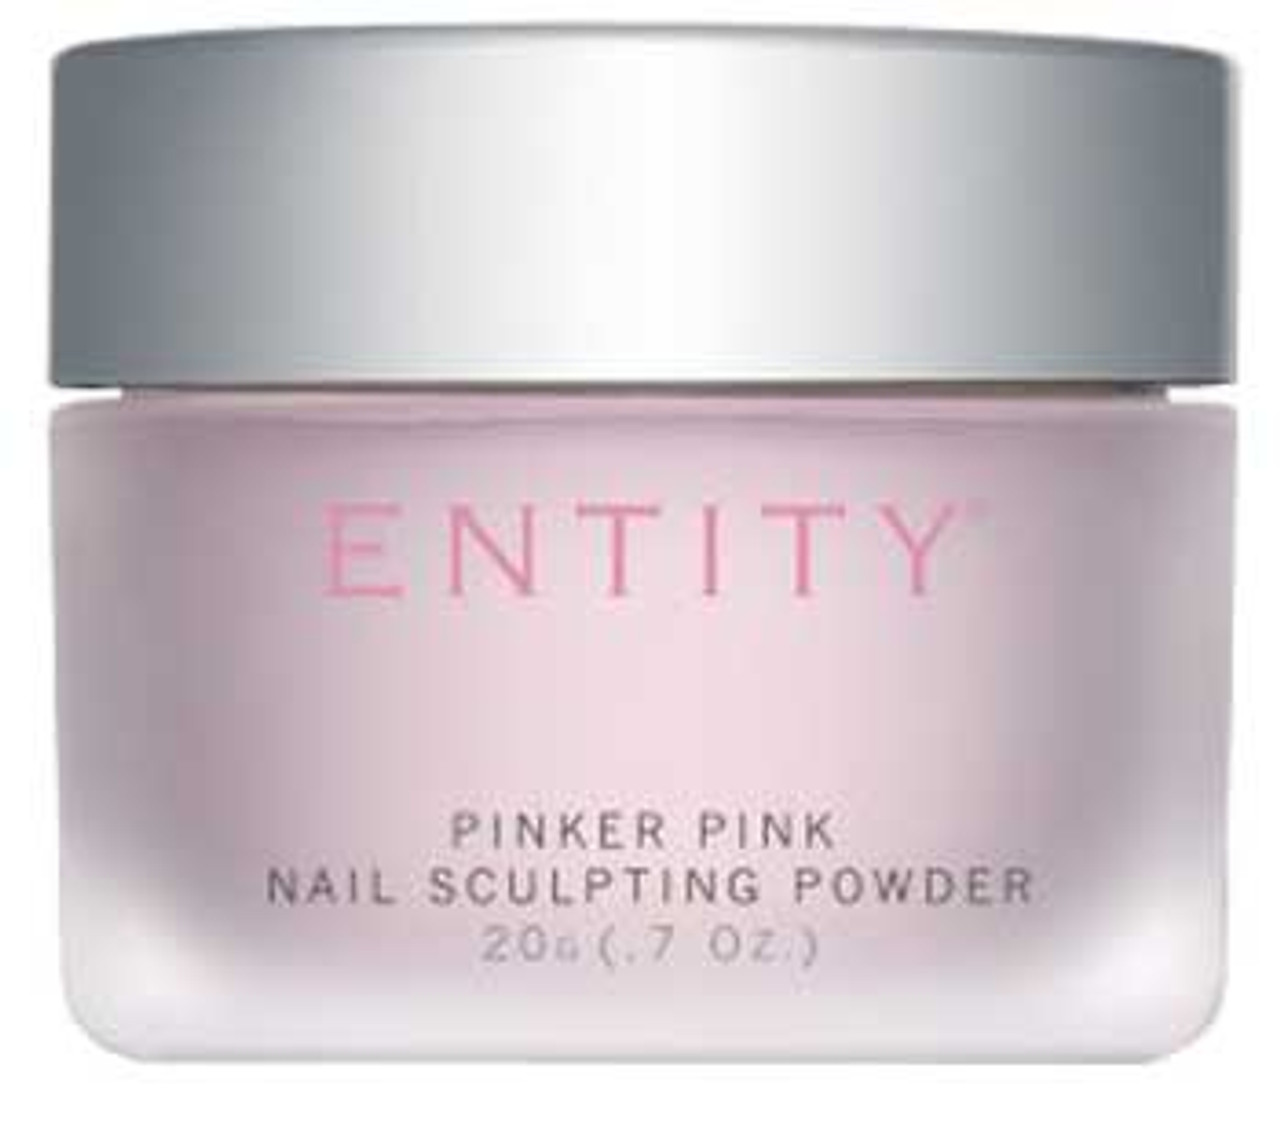 Entity Pinker Pink Sculpting Powder - .7oz (20g)